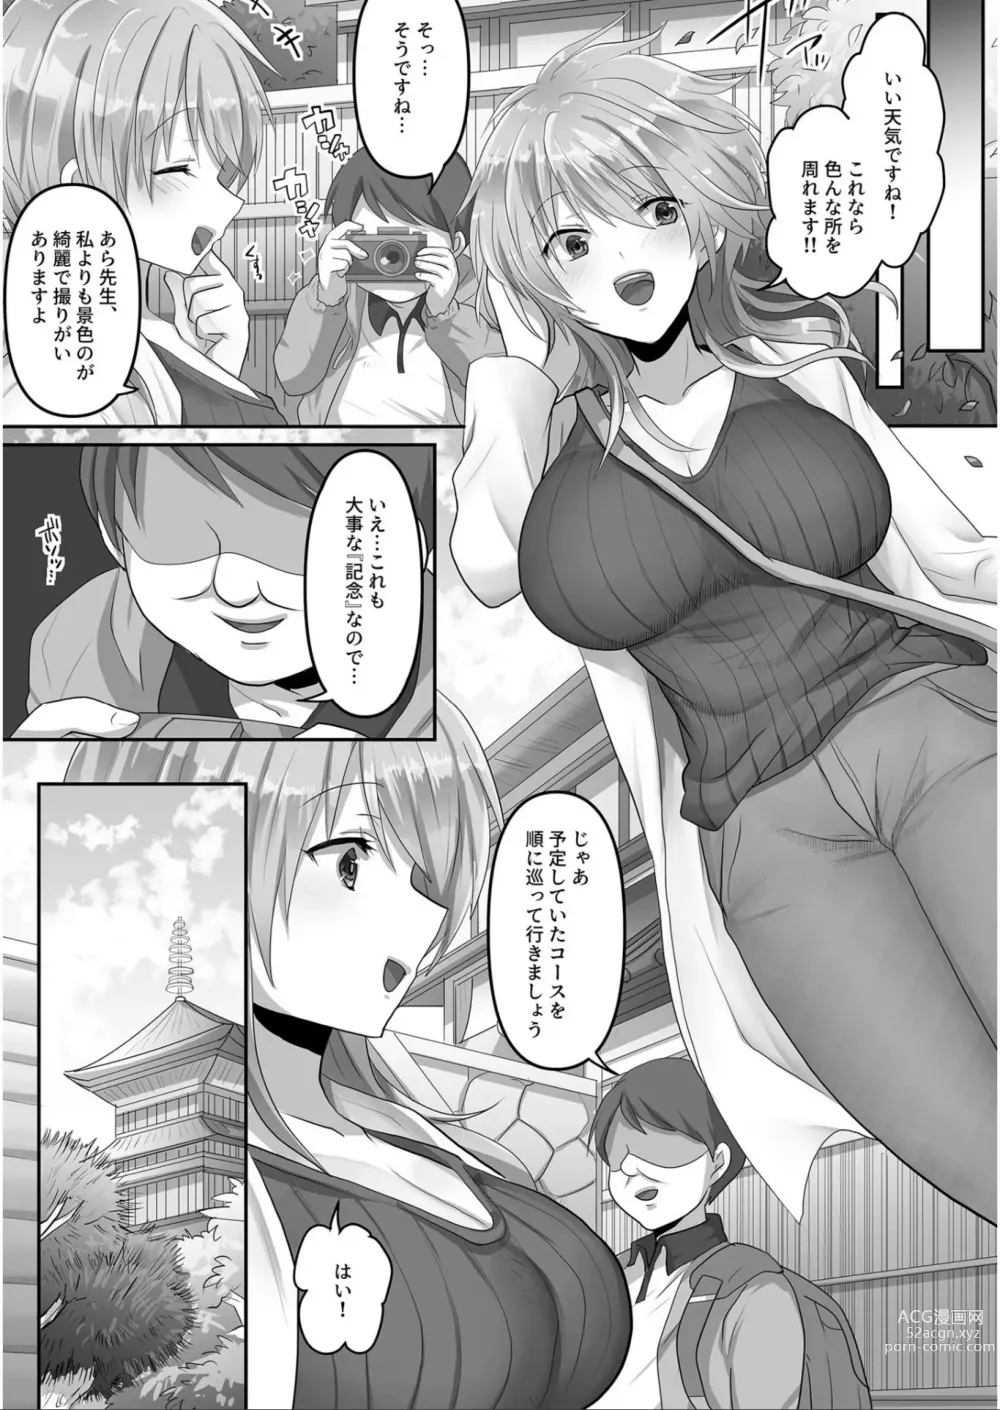 Page 8 of manga Kegasareta Watashi...